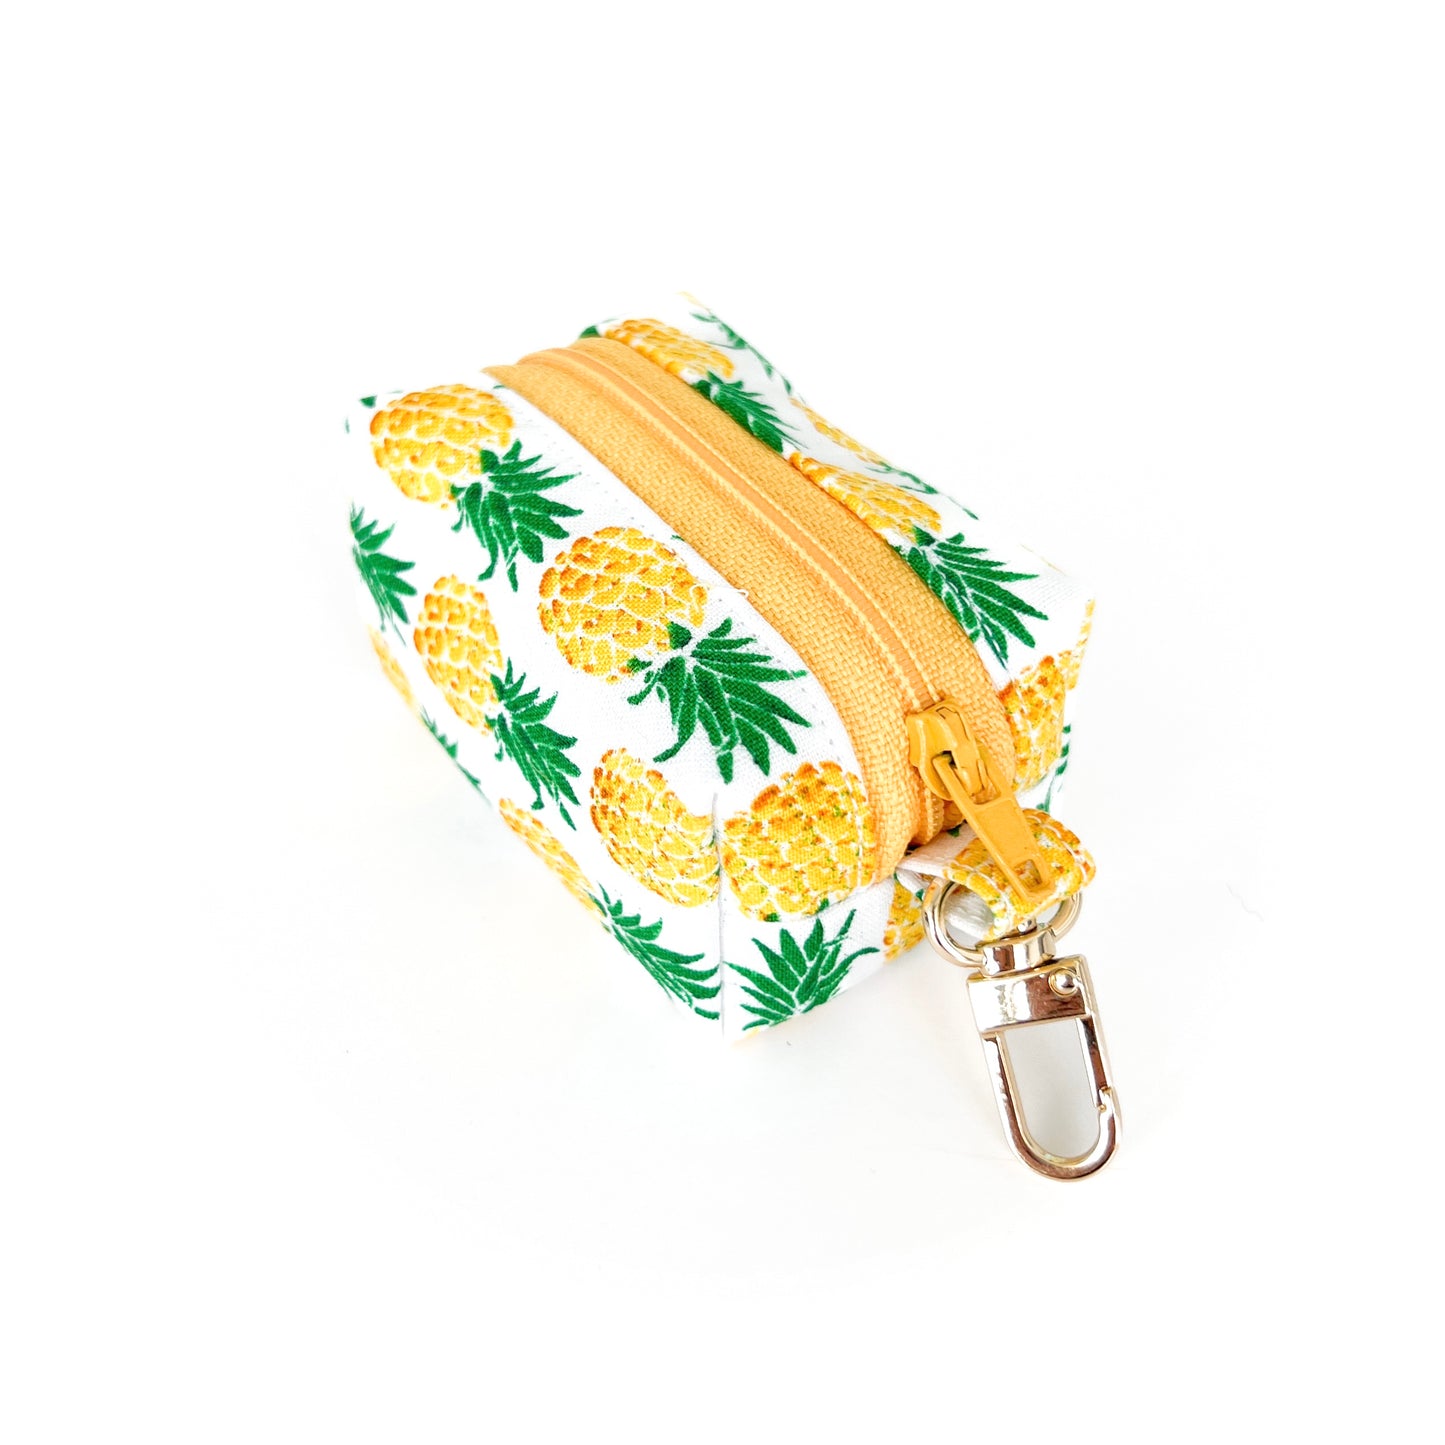 Pineapple Waste Bag Holder